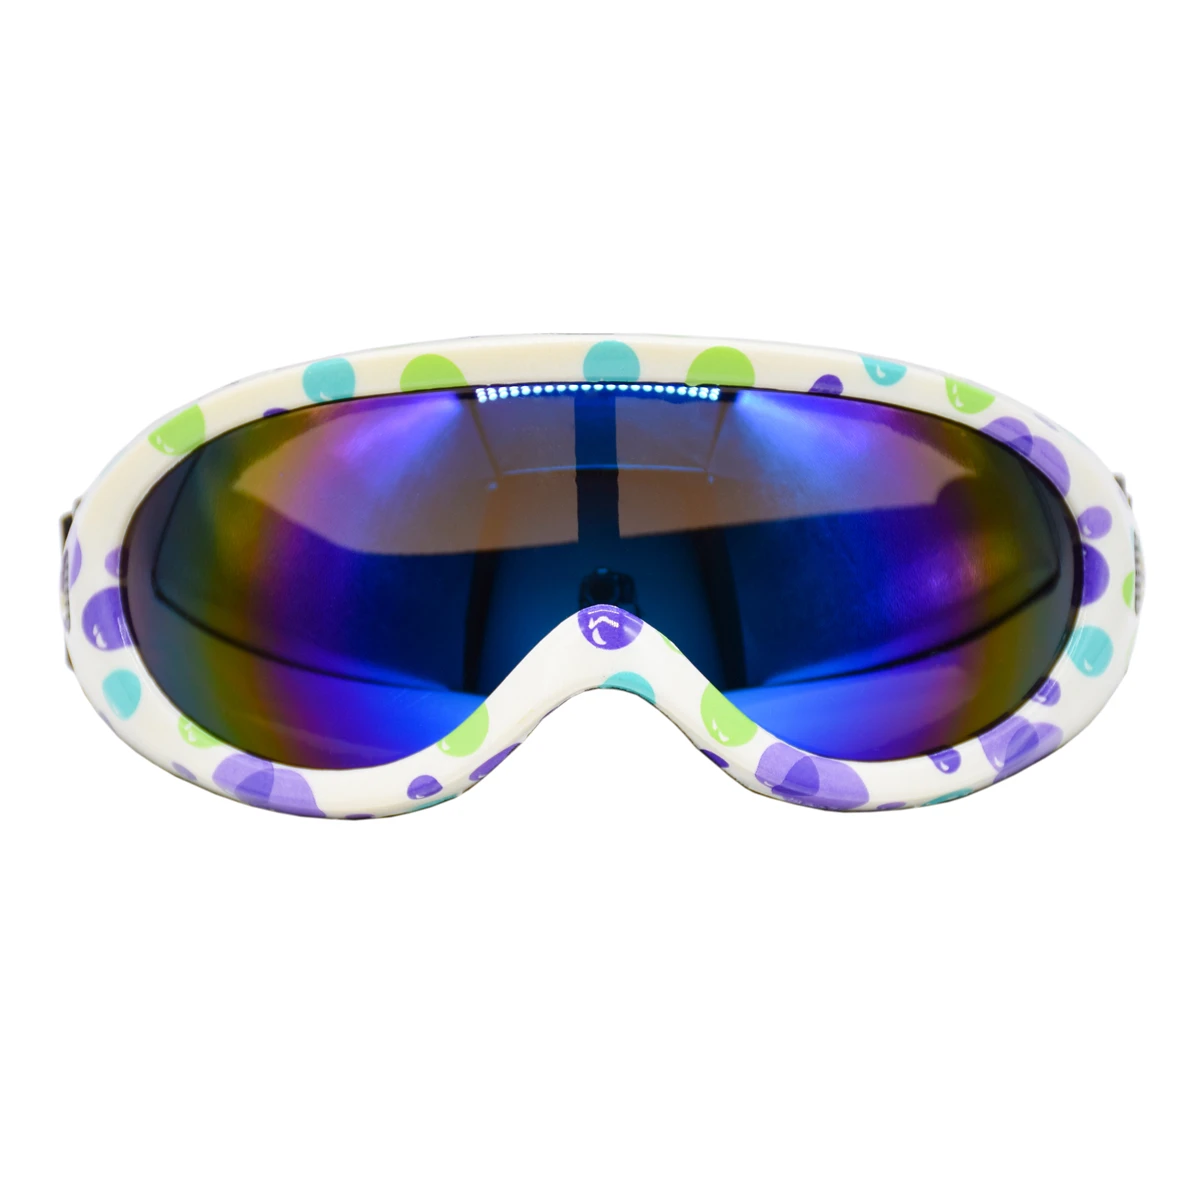 Youth Snowboard Gafas Ski Goggles Boys Girls Snow Goggle Snowboard Mask Winter oculos de neve Kids Ski Skiing Glasses Goggles